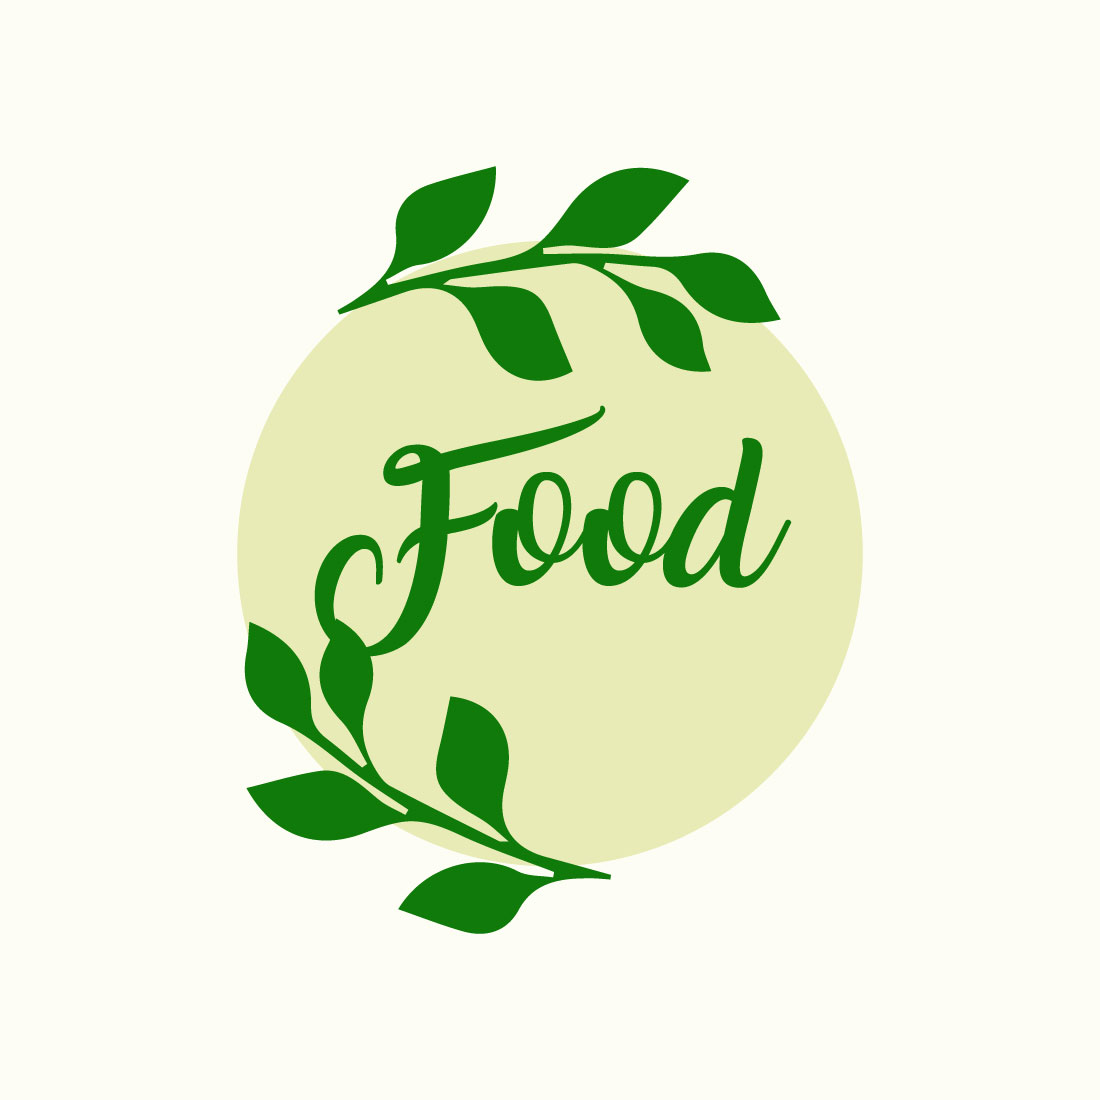 sustainable food logo